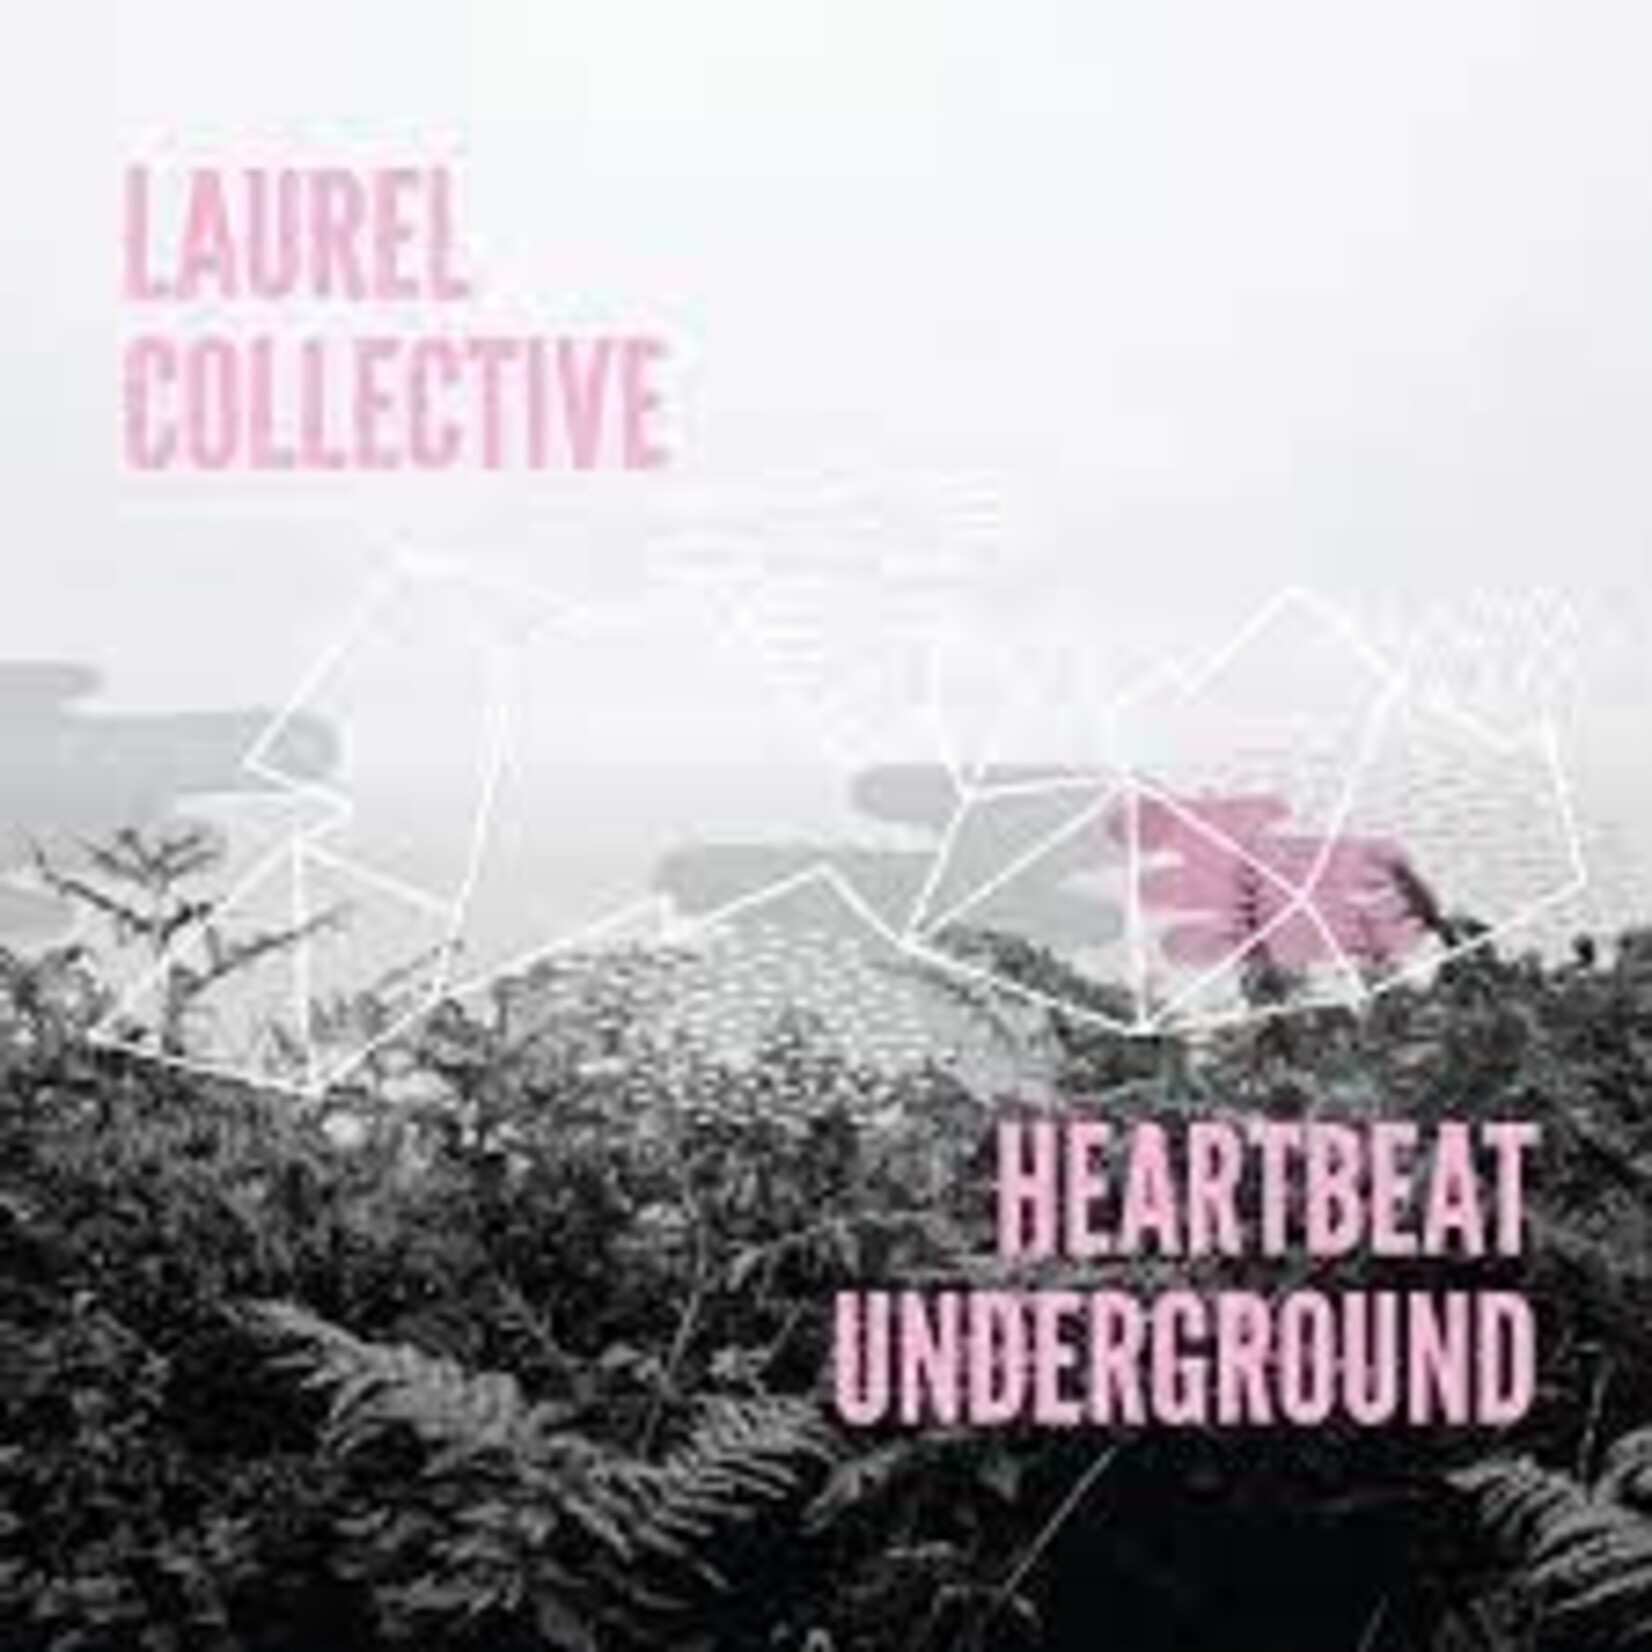 LAUREN COLLECTIVE - heartbeat underground LP